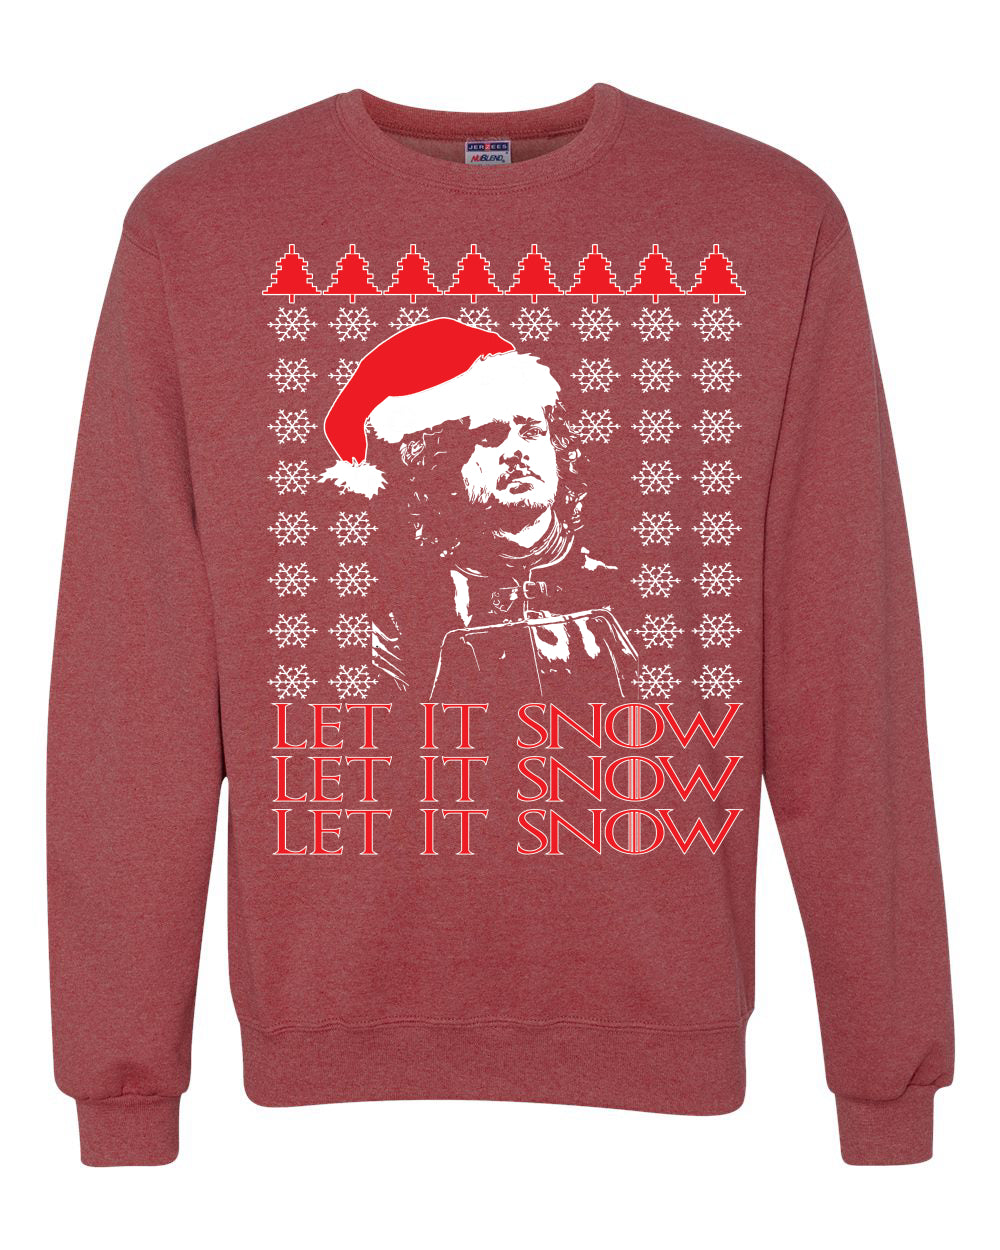 Let It Snow X 3 Jon Snow GoT Unisex Crewneck Graphic Sweatshirt